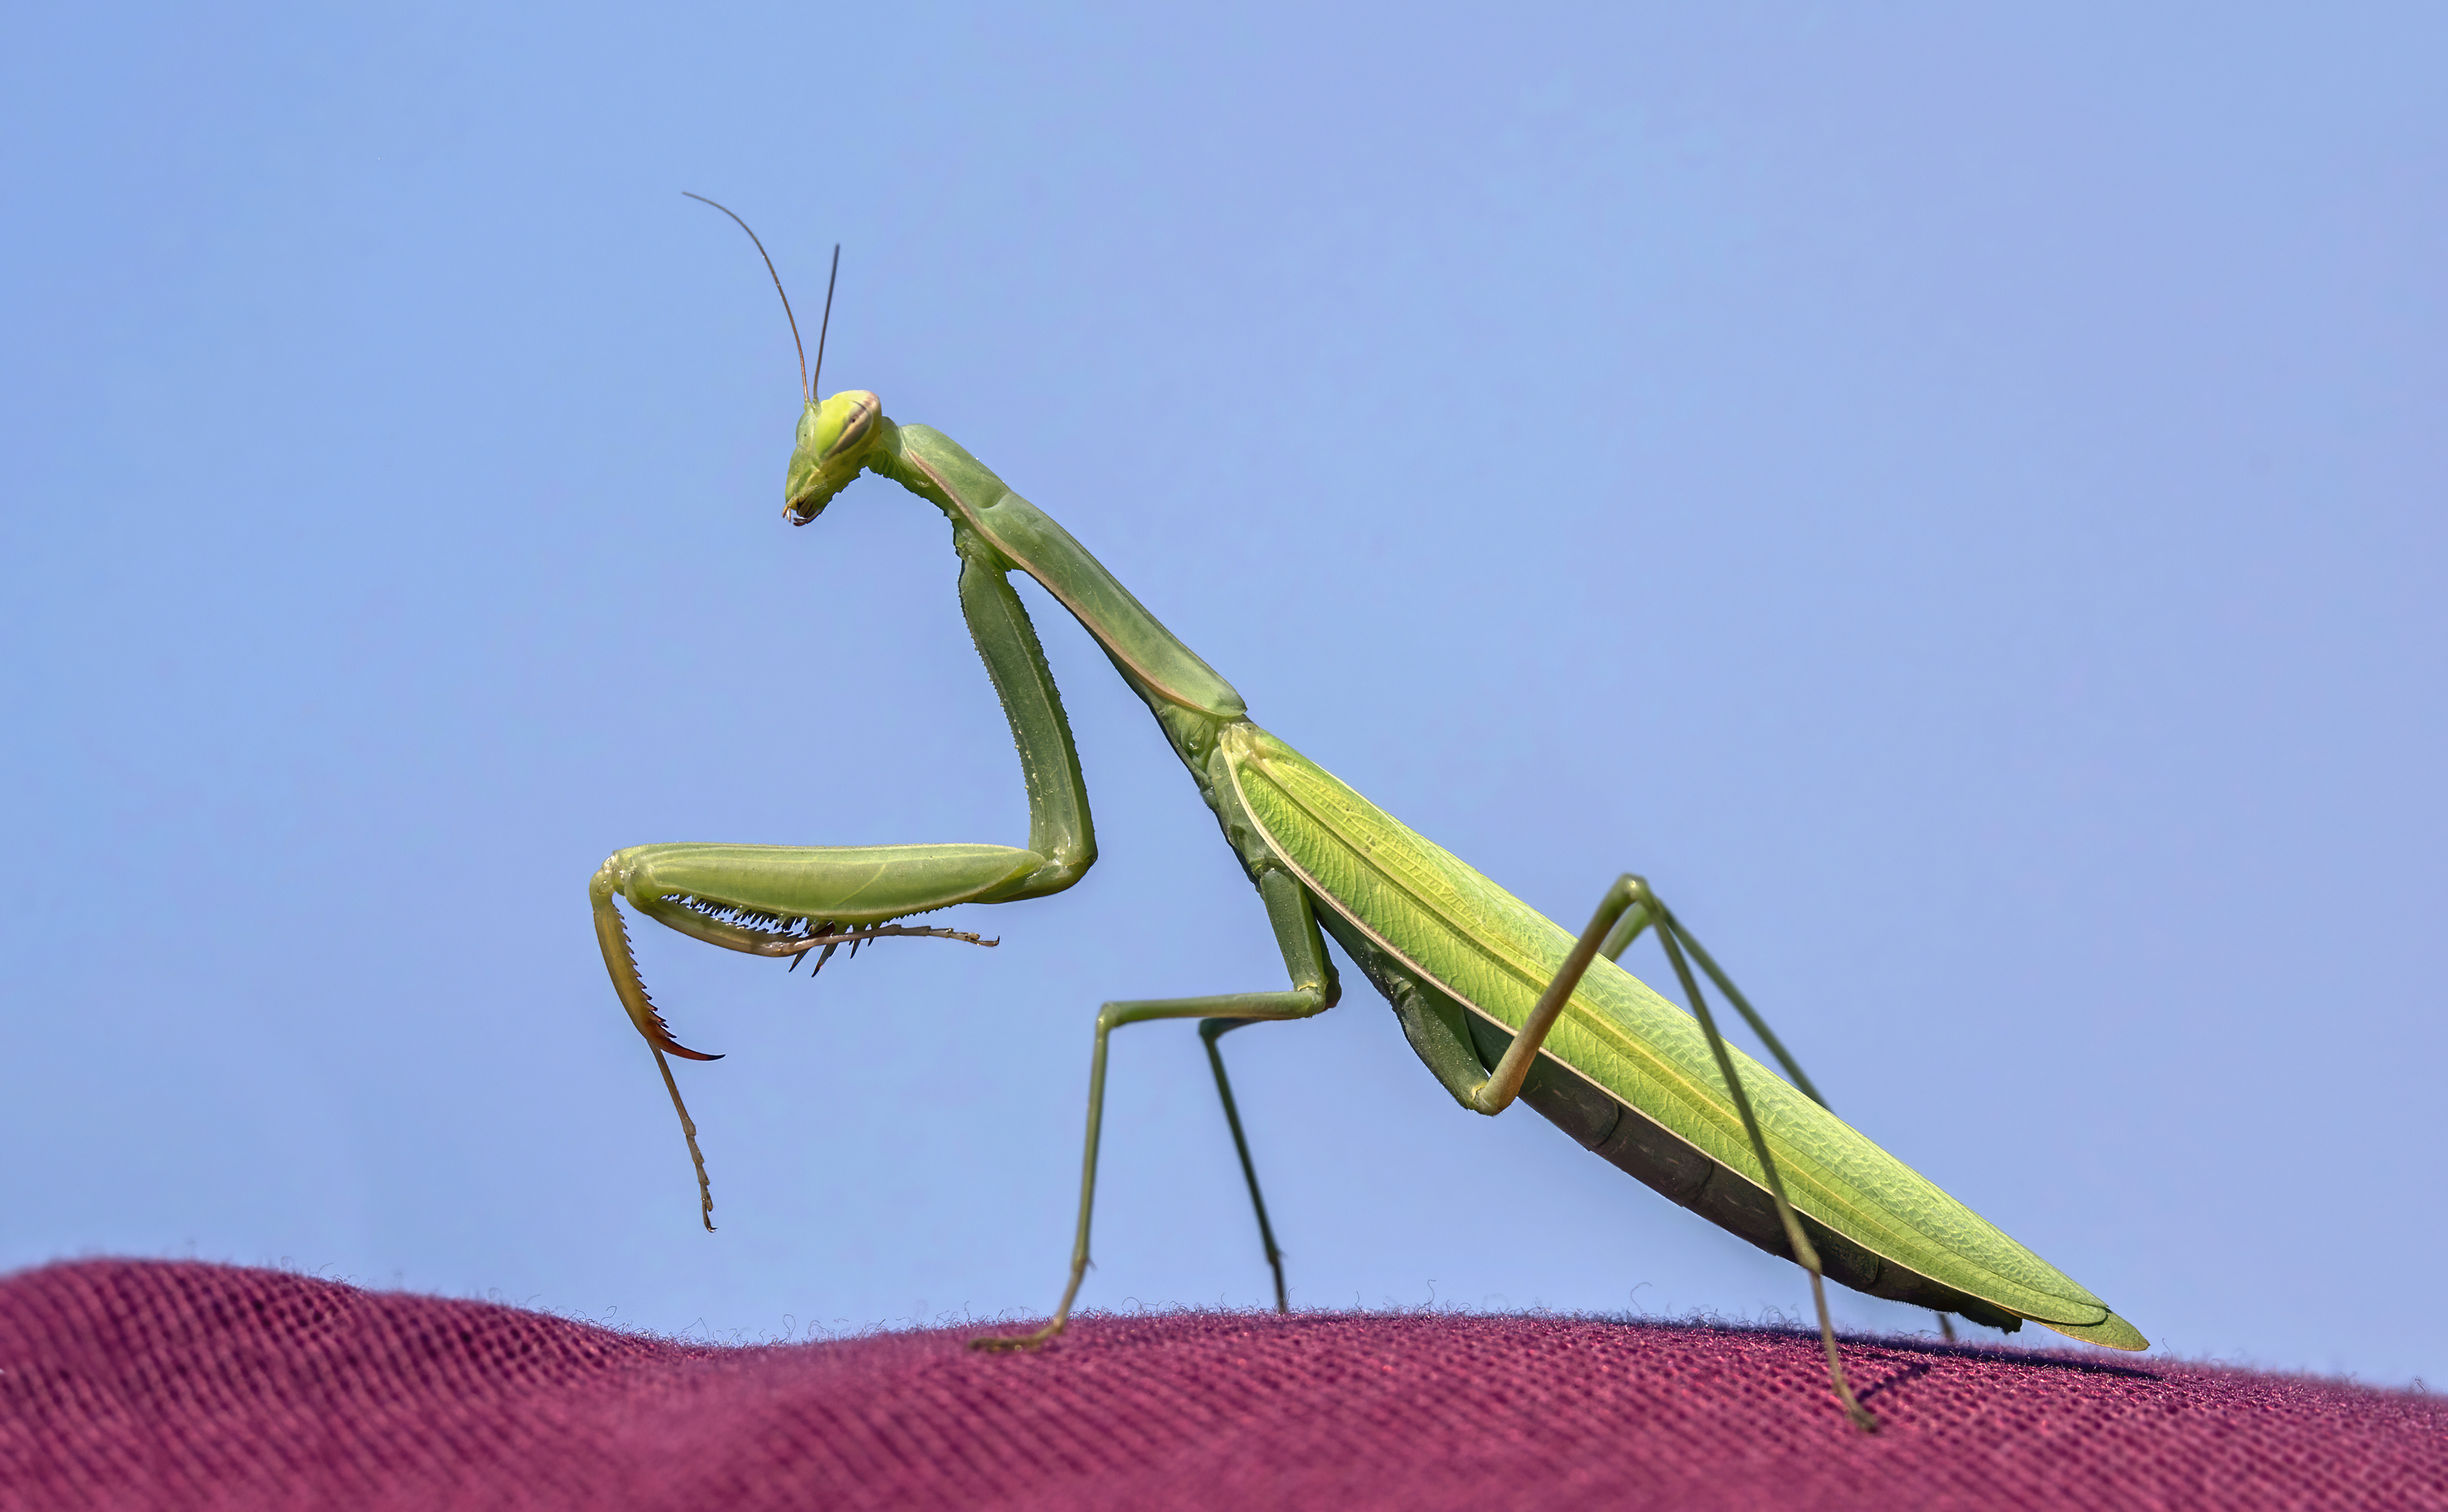 https://upload.wikimedia.org/wikipedia/commons/6/62/European_praying_mantis_(Mantis_religiosa)_green_female_Dobruja.jpg